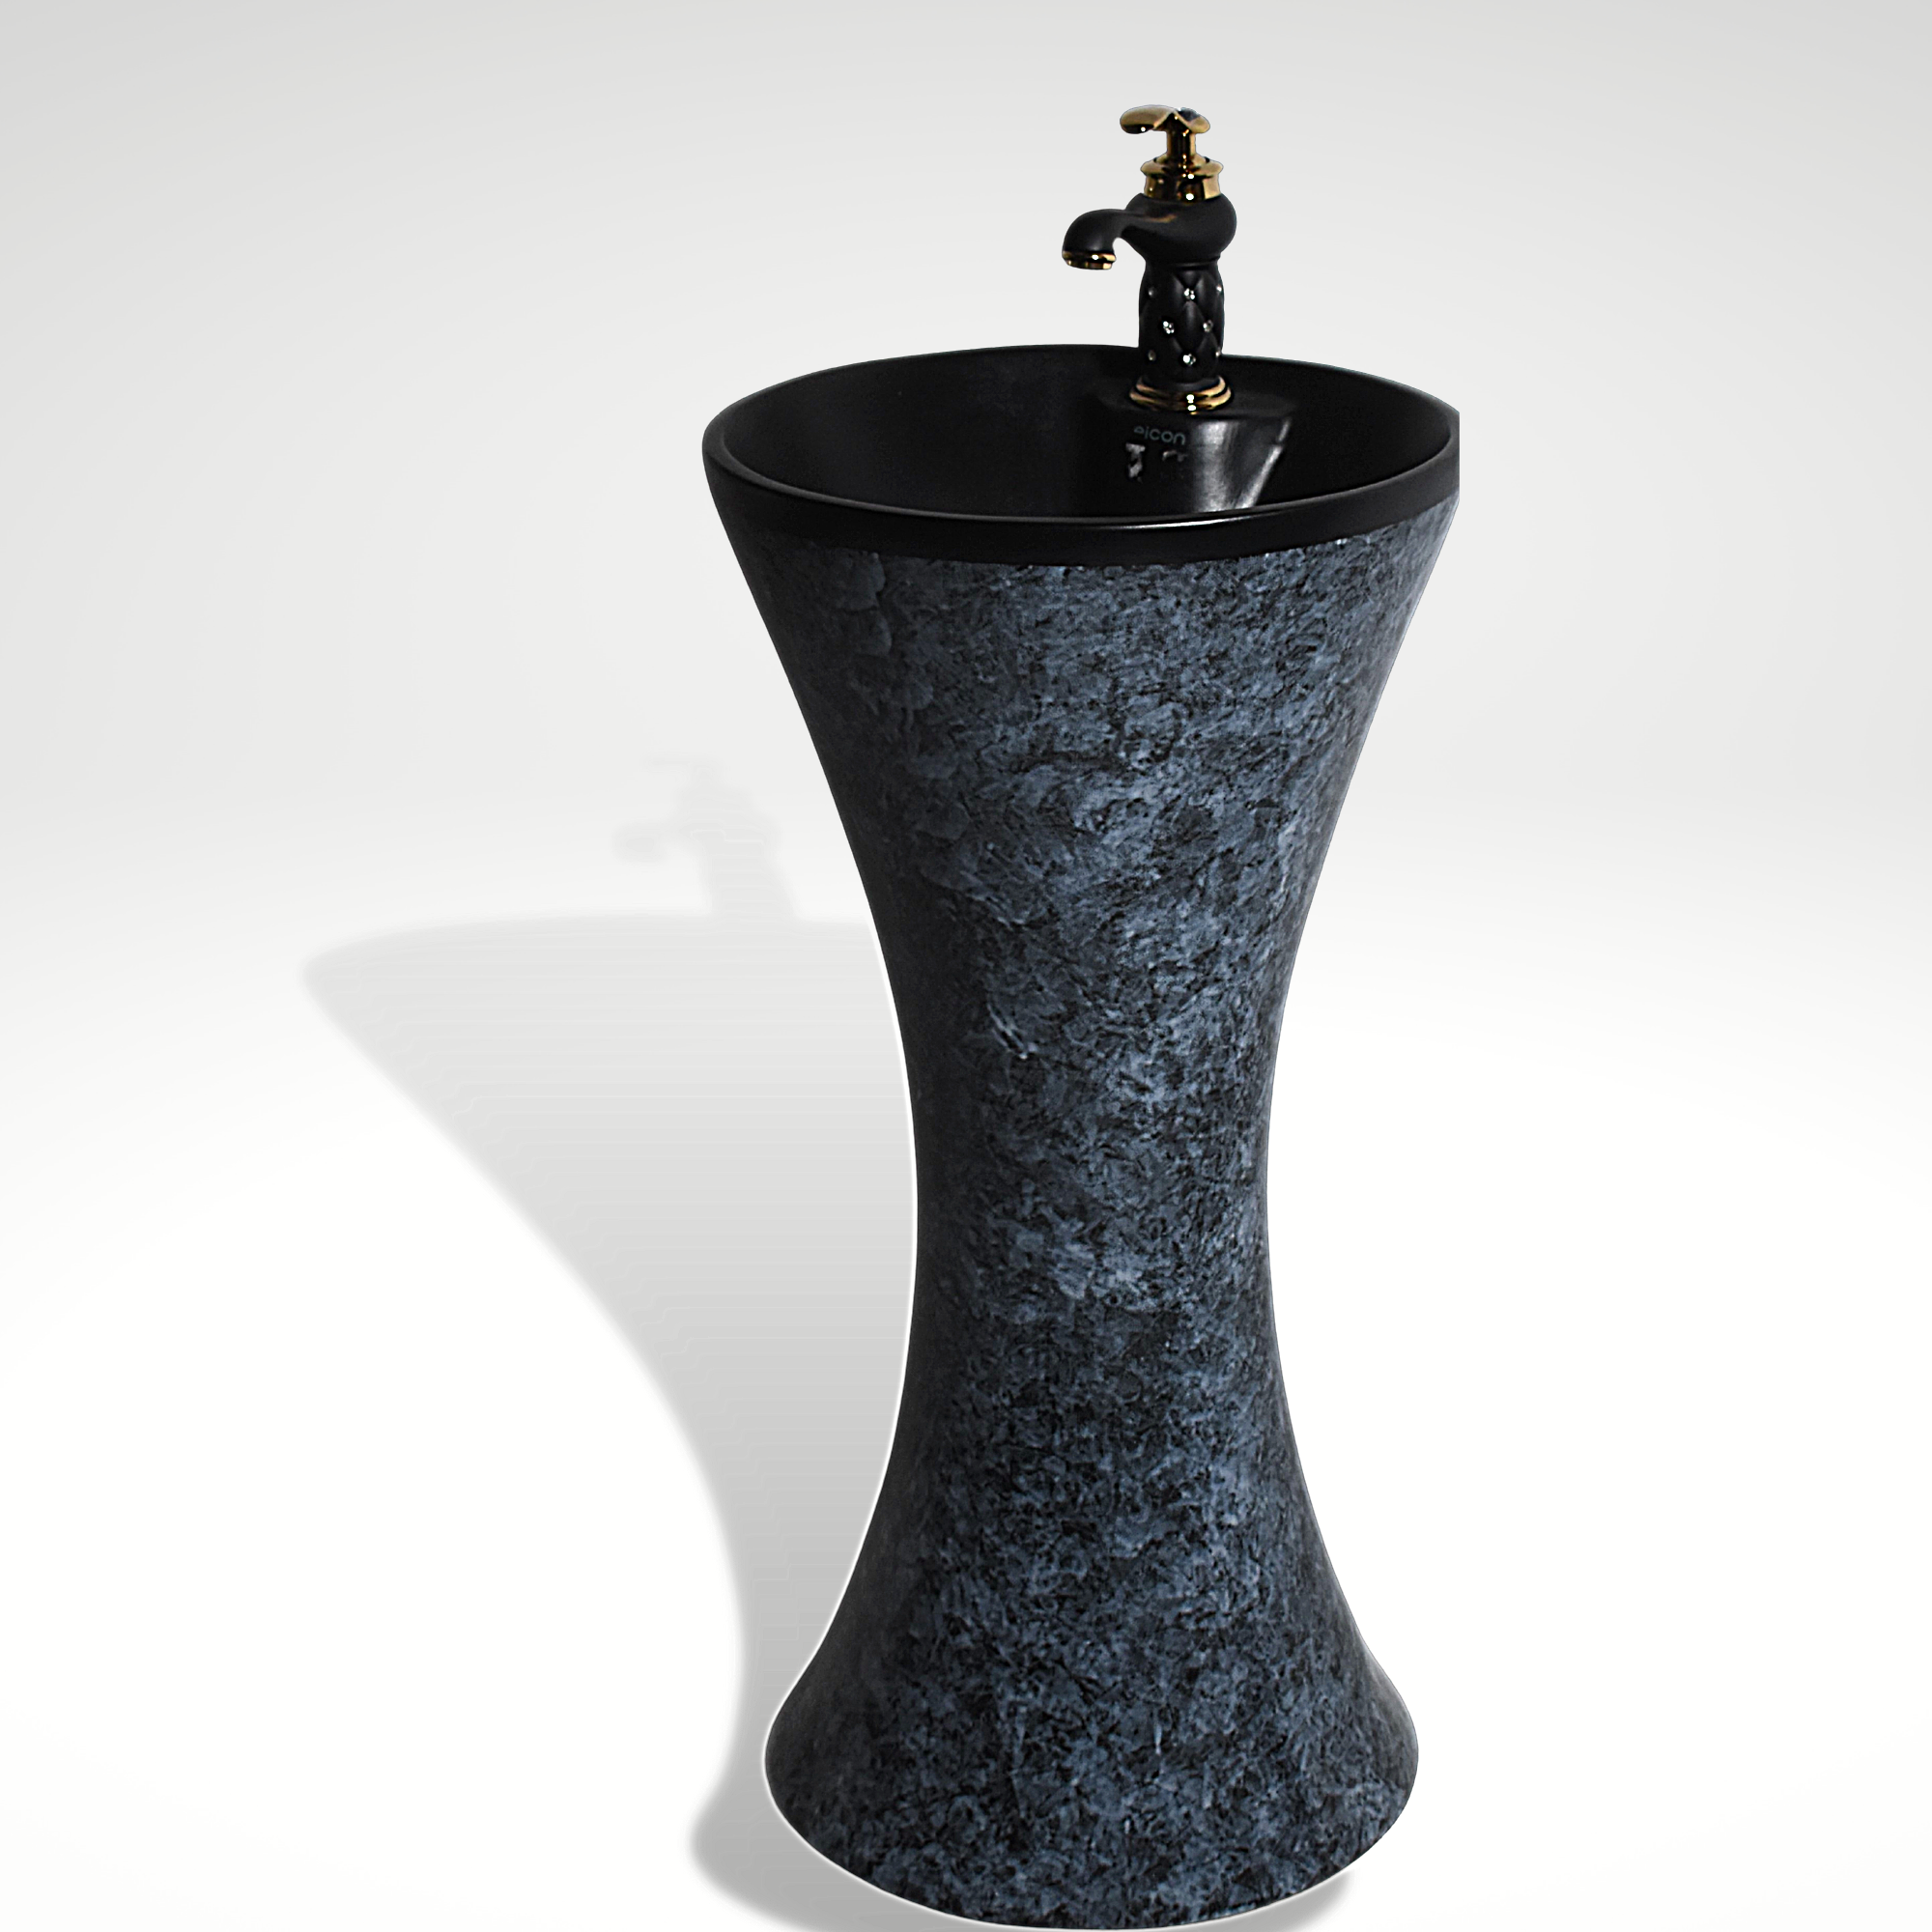 inart ceramic standing basin for bathroom dining hall